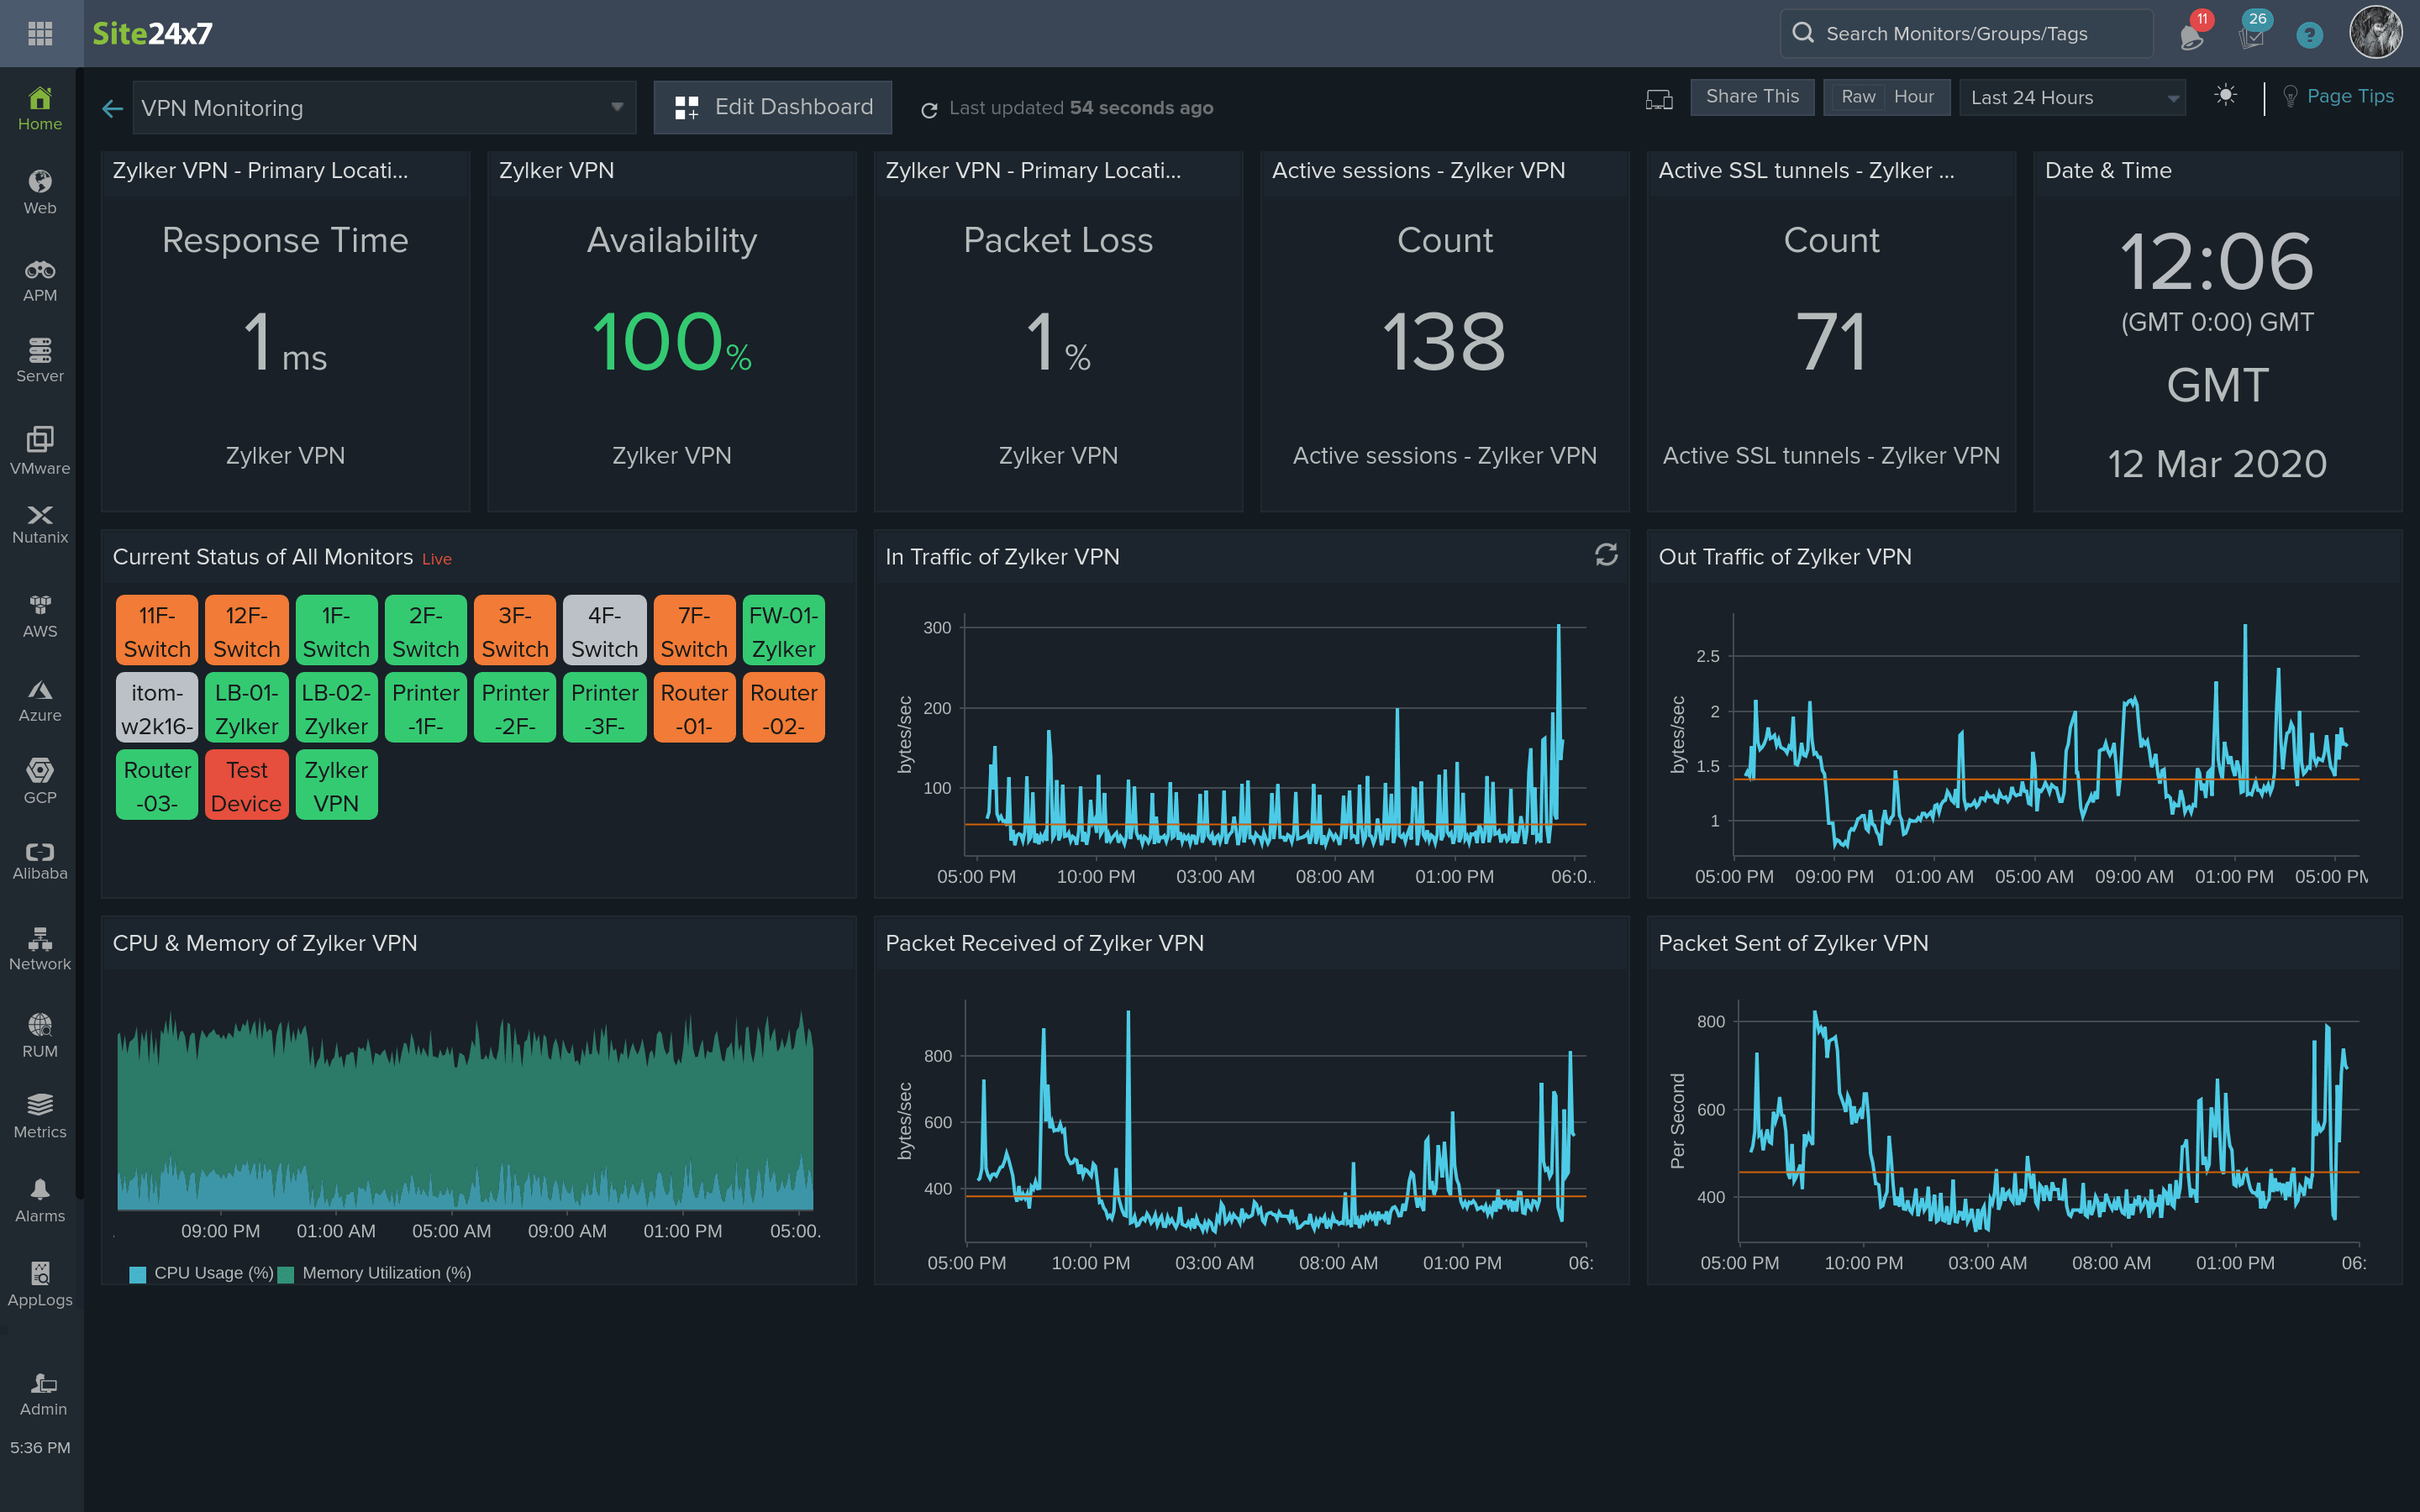 VPN Monitoring dashboard